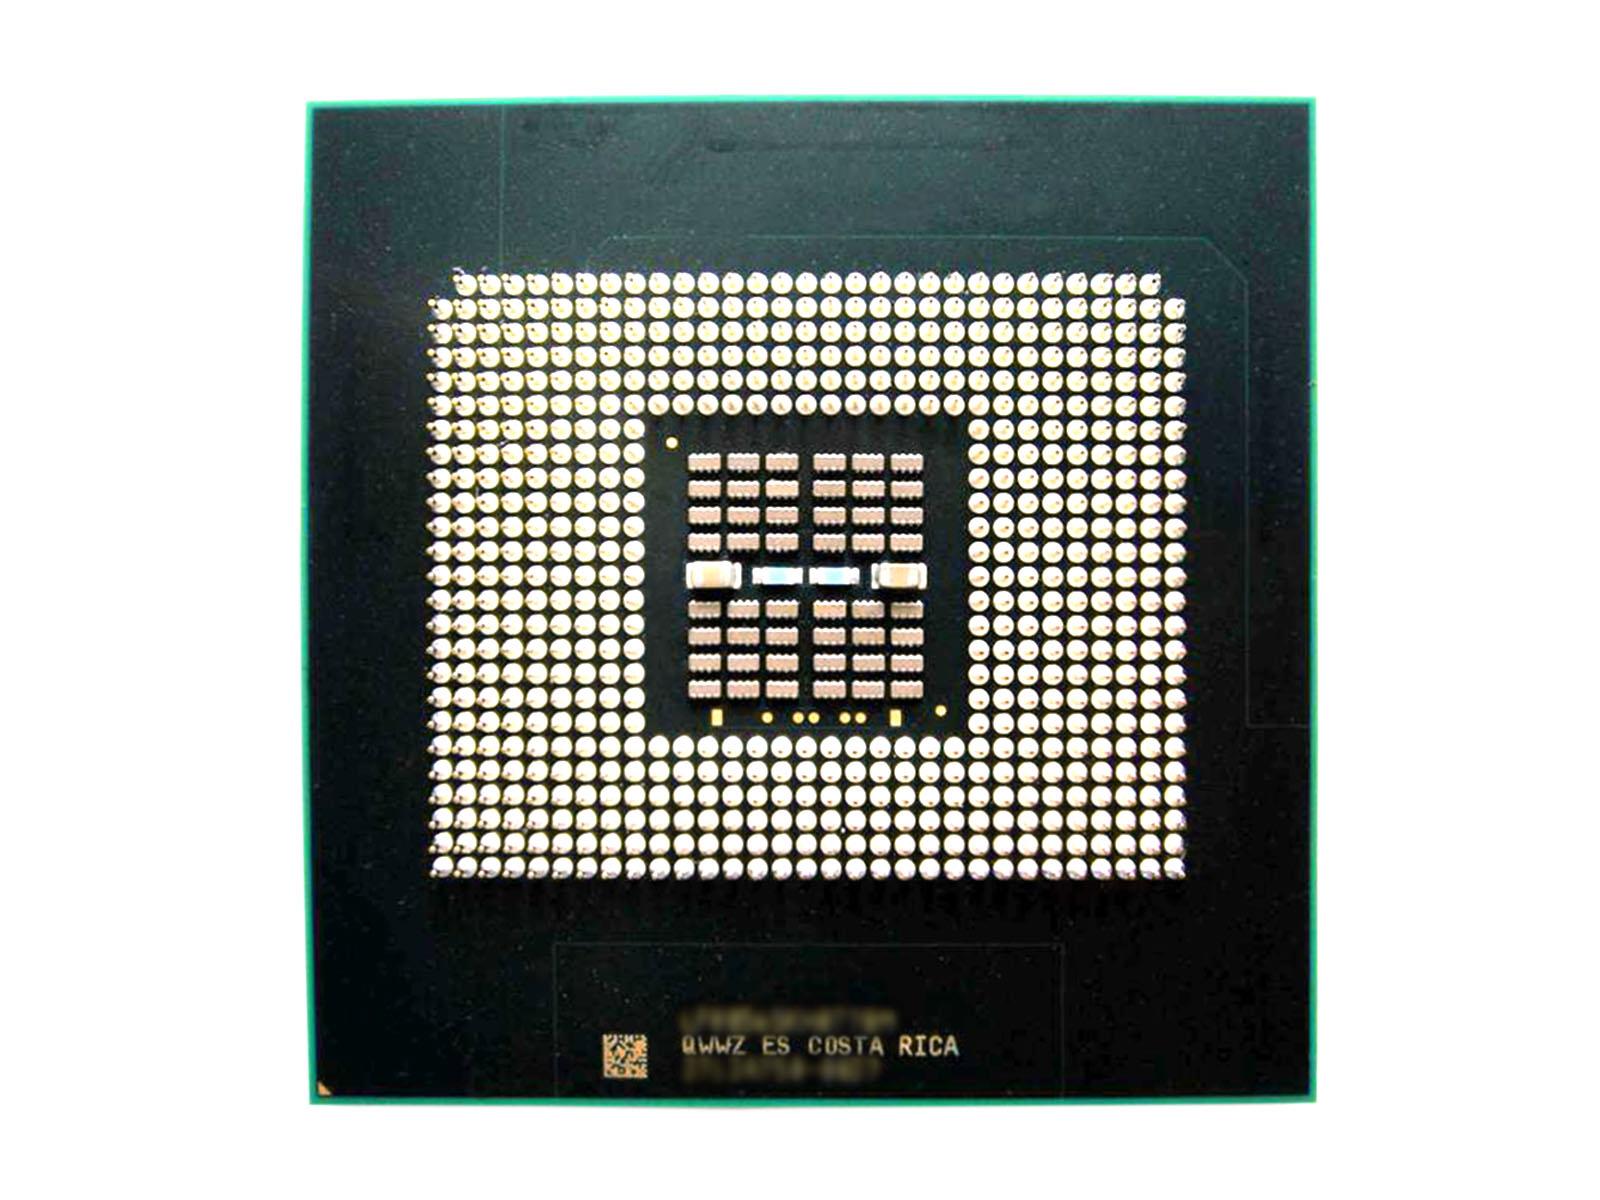 Intel Xeon 604 2.8GHz CPU